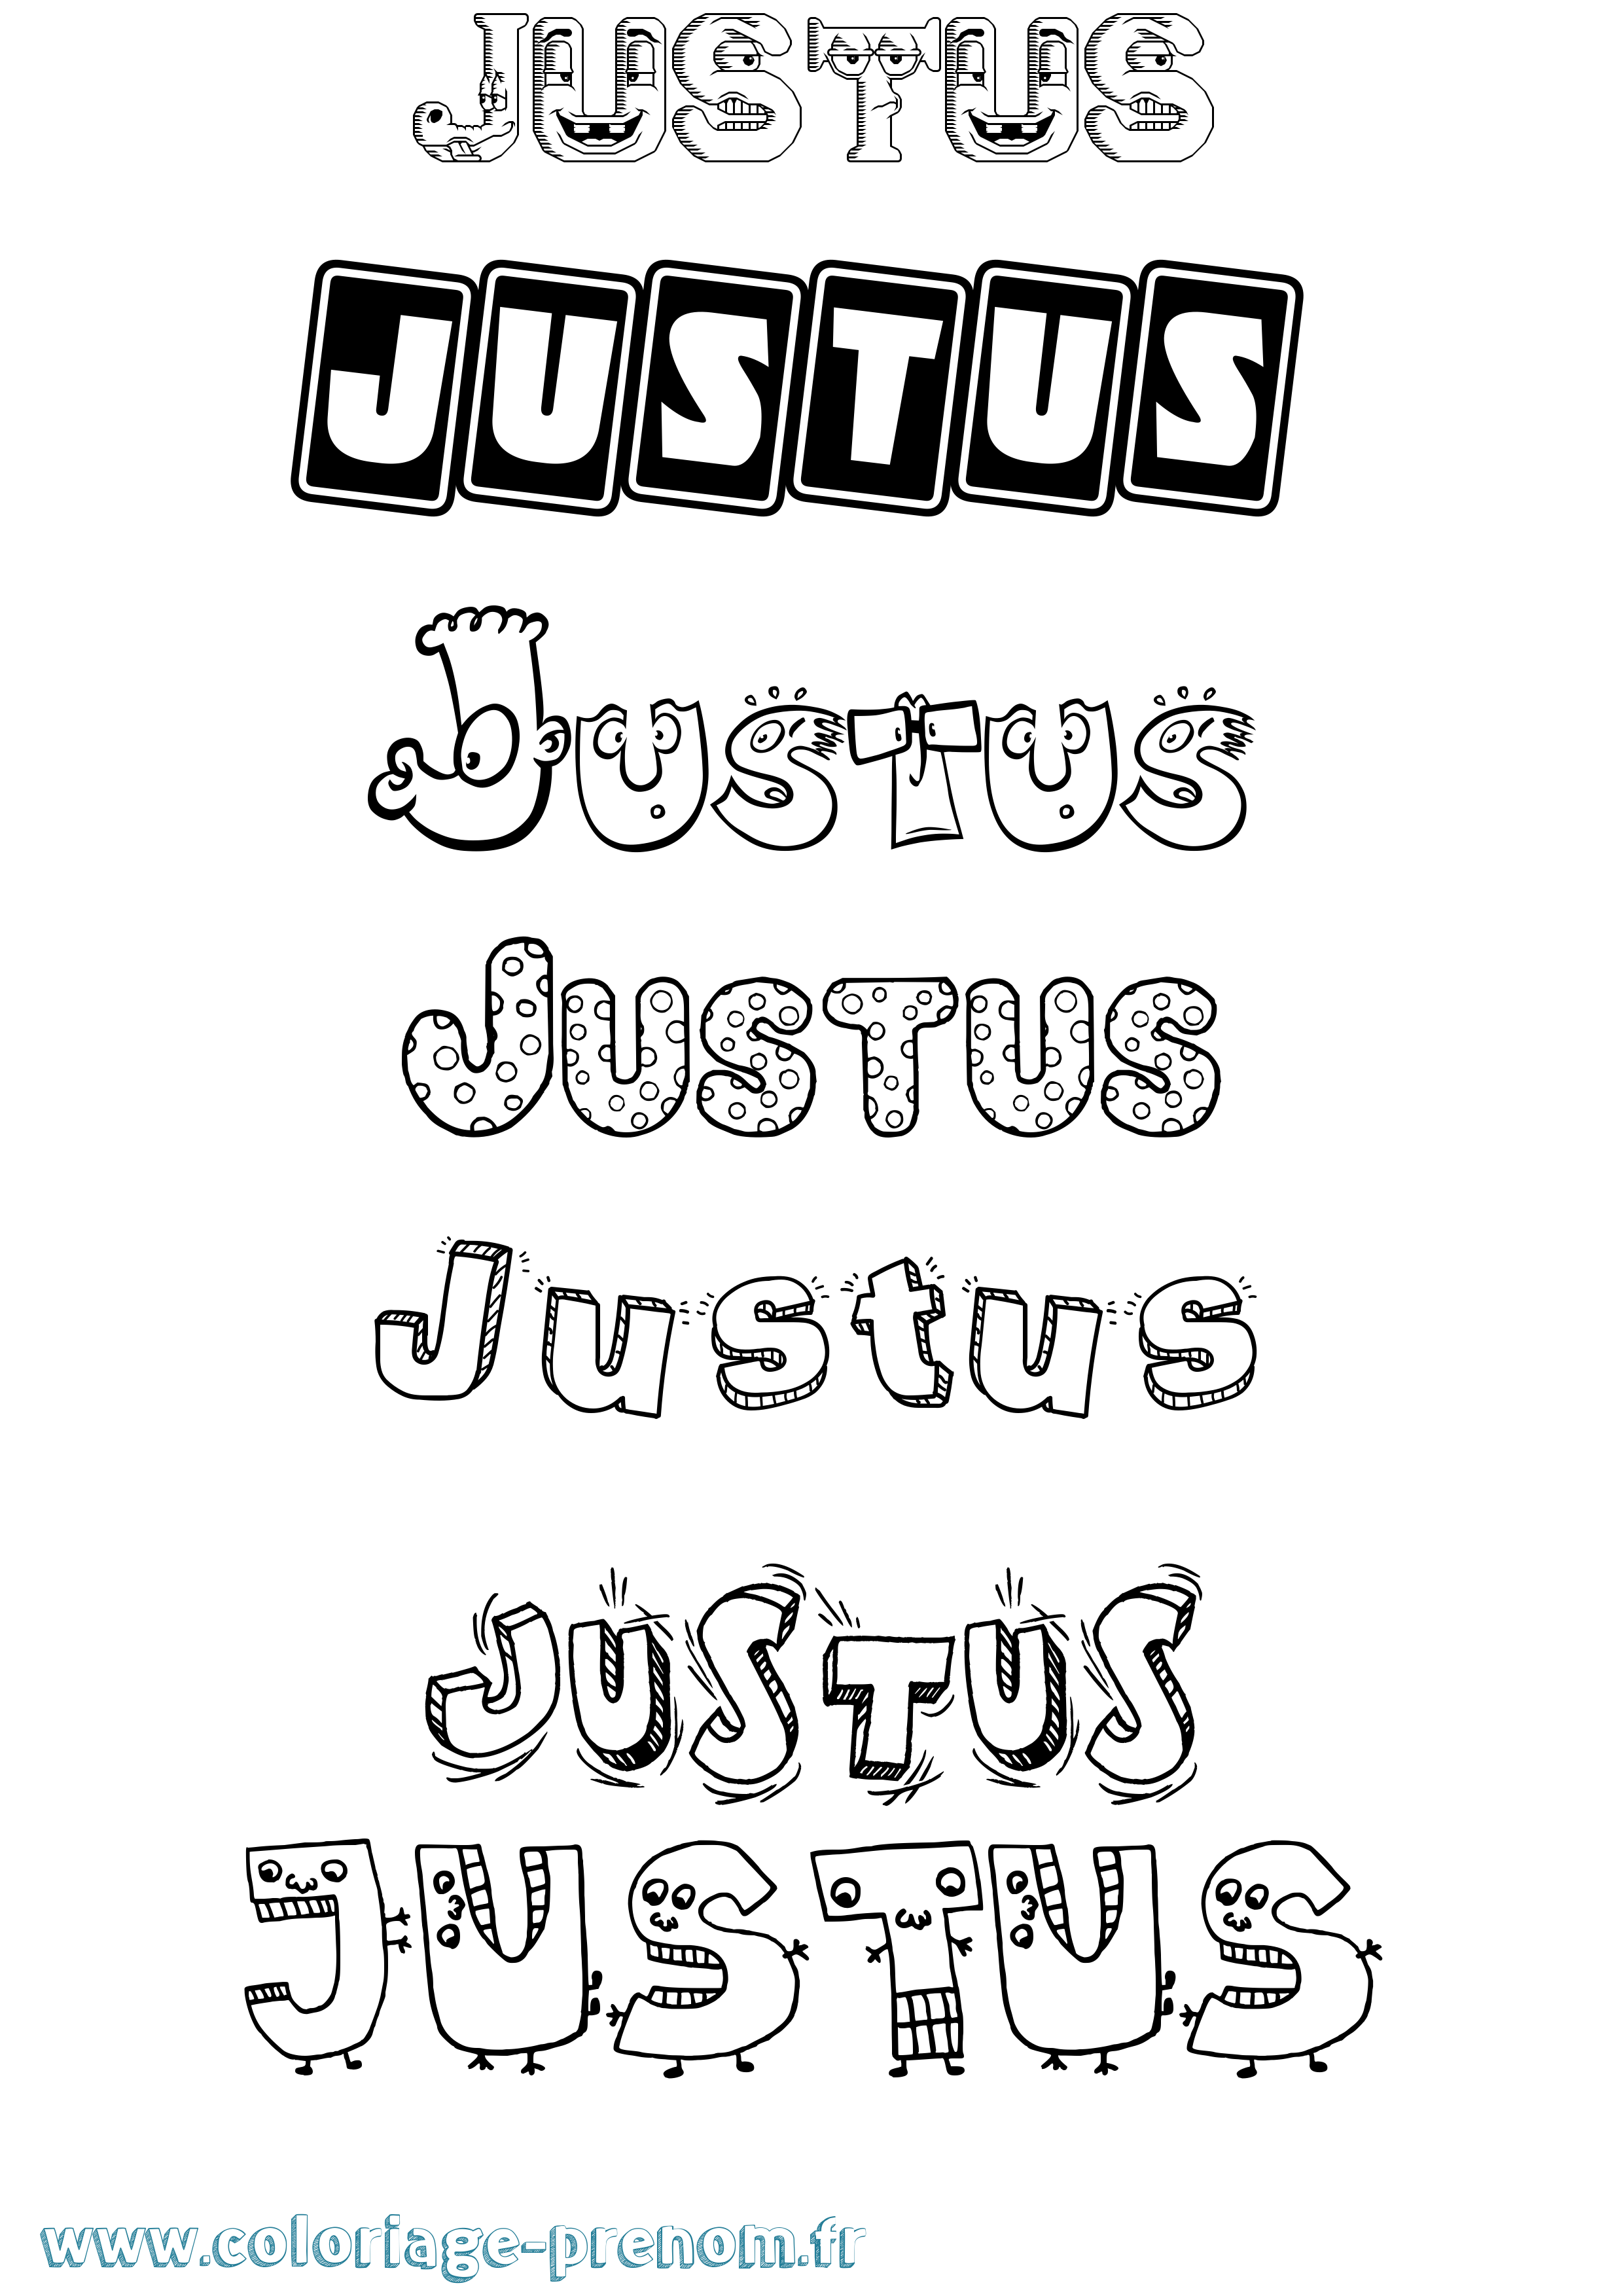 Coloriage prénom Justus Fun